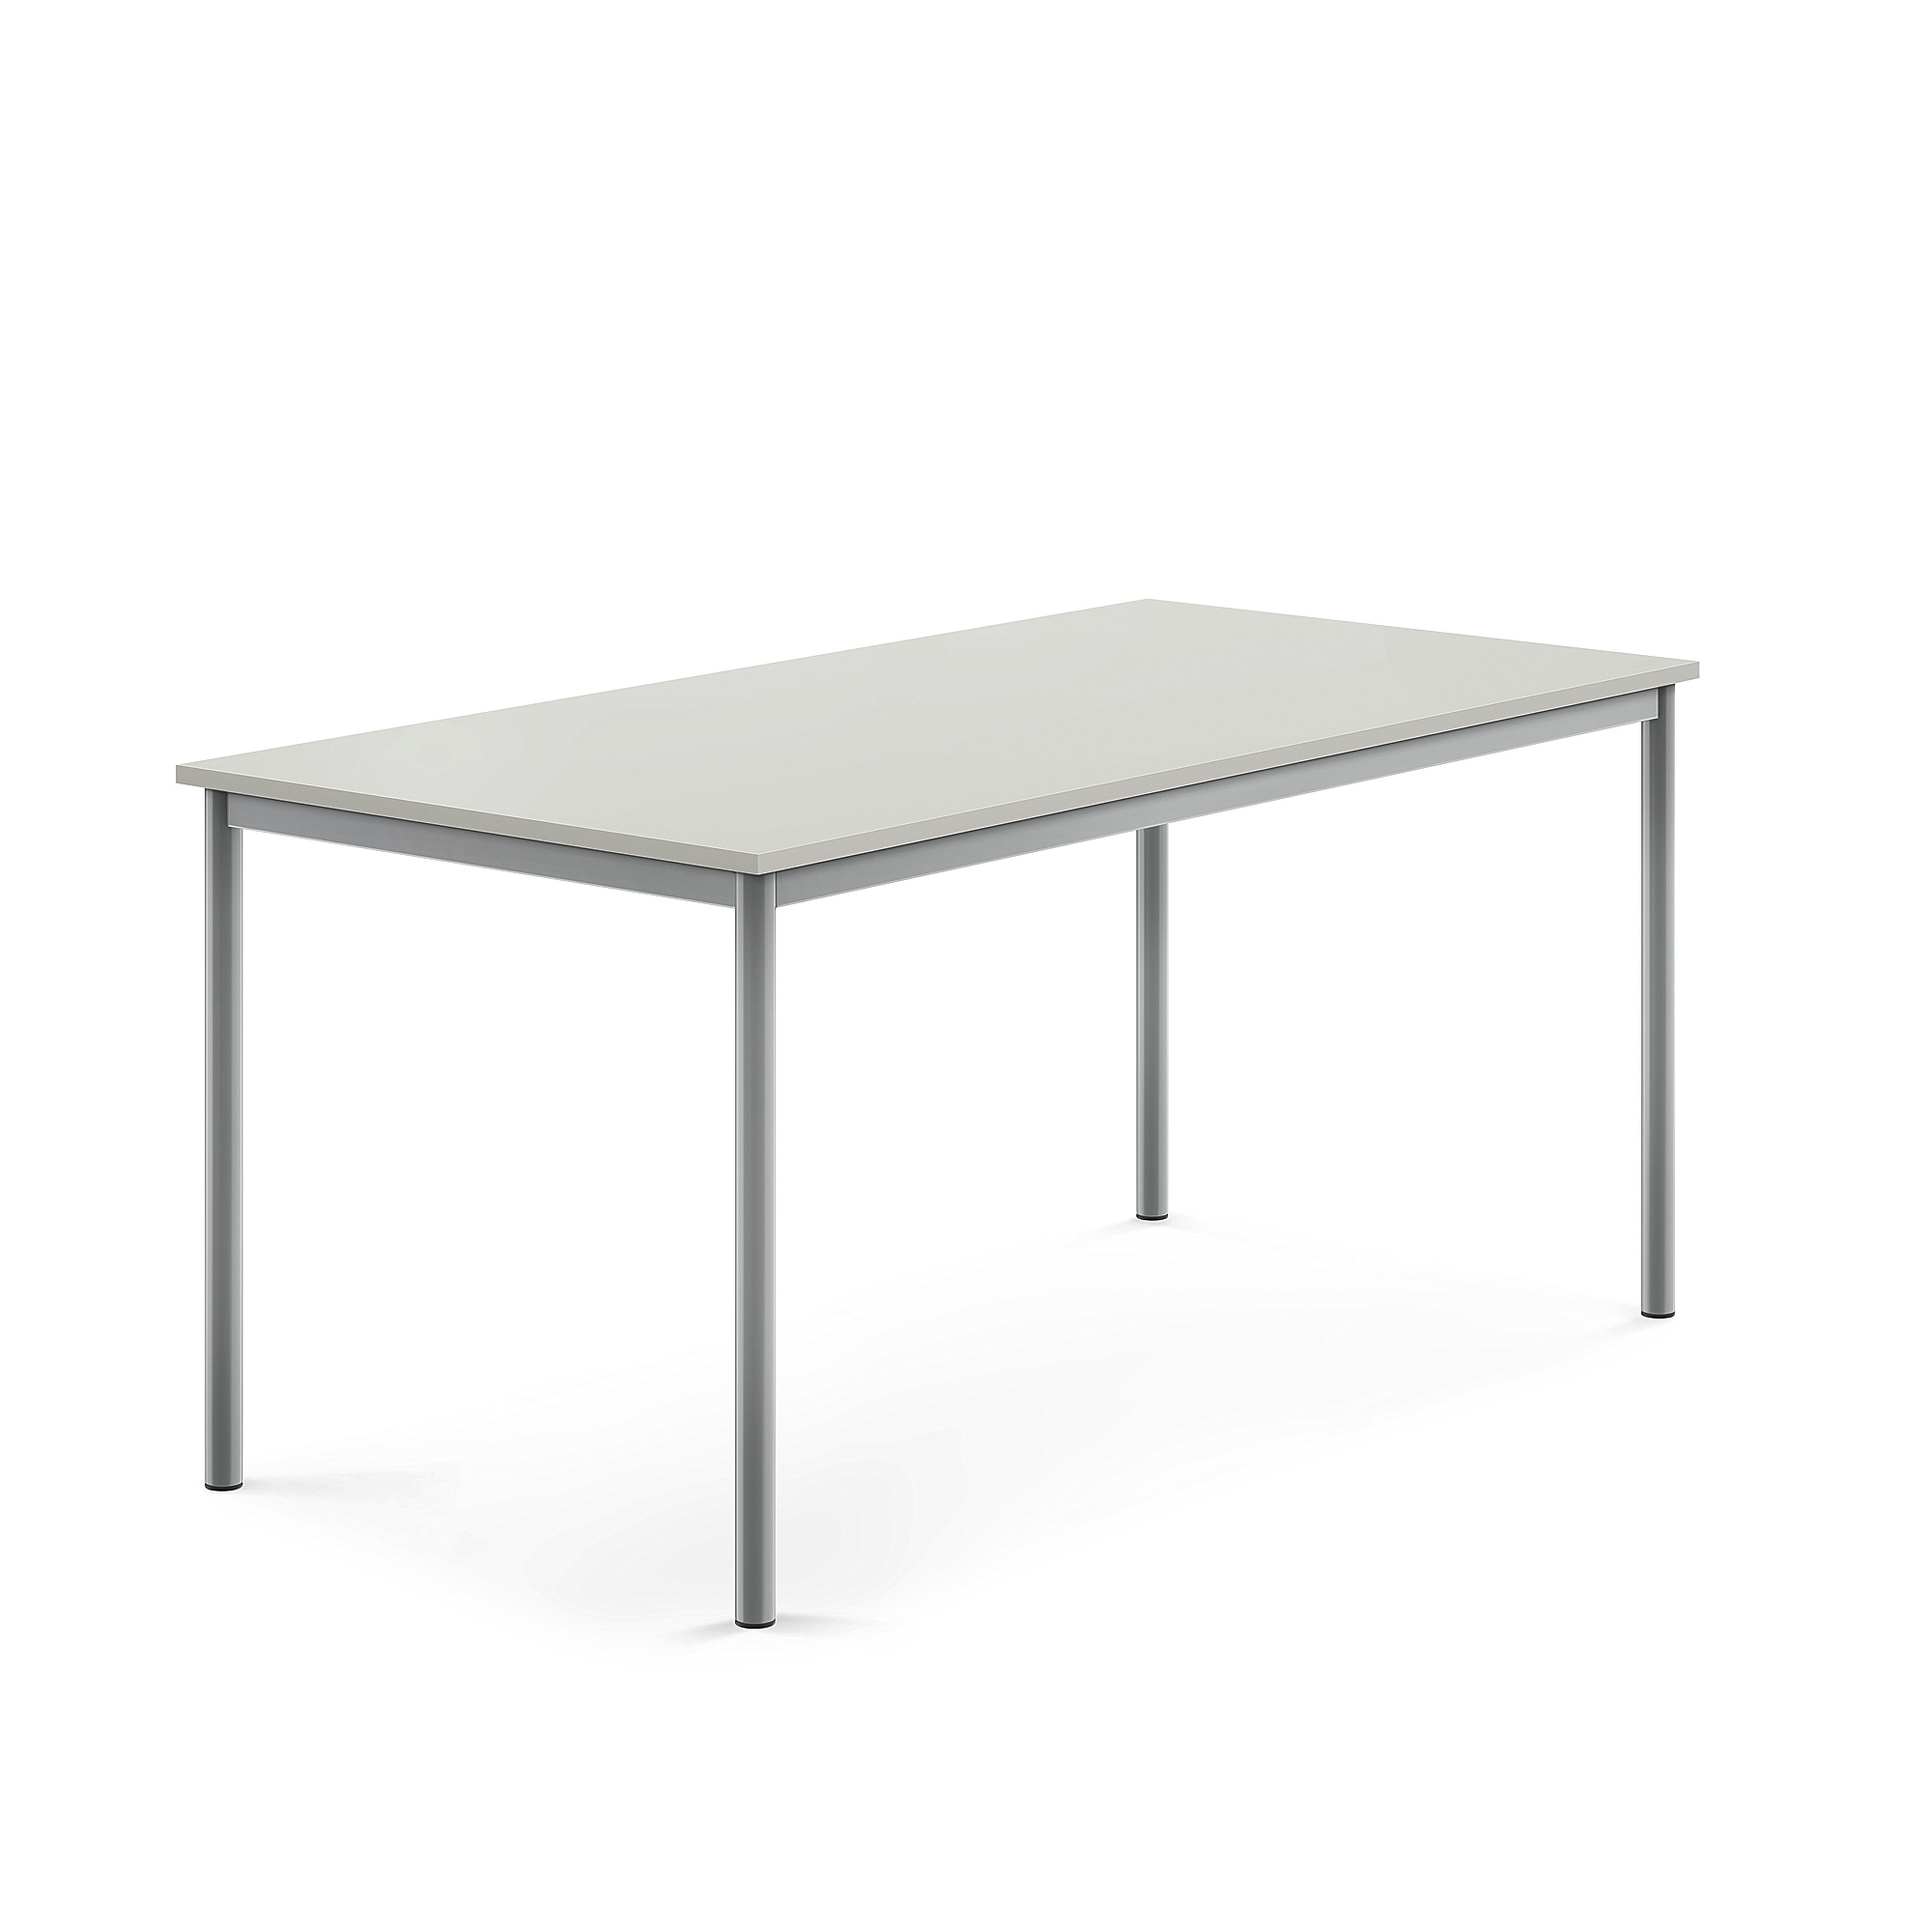 Stůl BORÅS, 1600x800x720 mm, stříbrné nohy, HPL deska, šedá